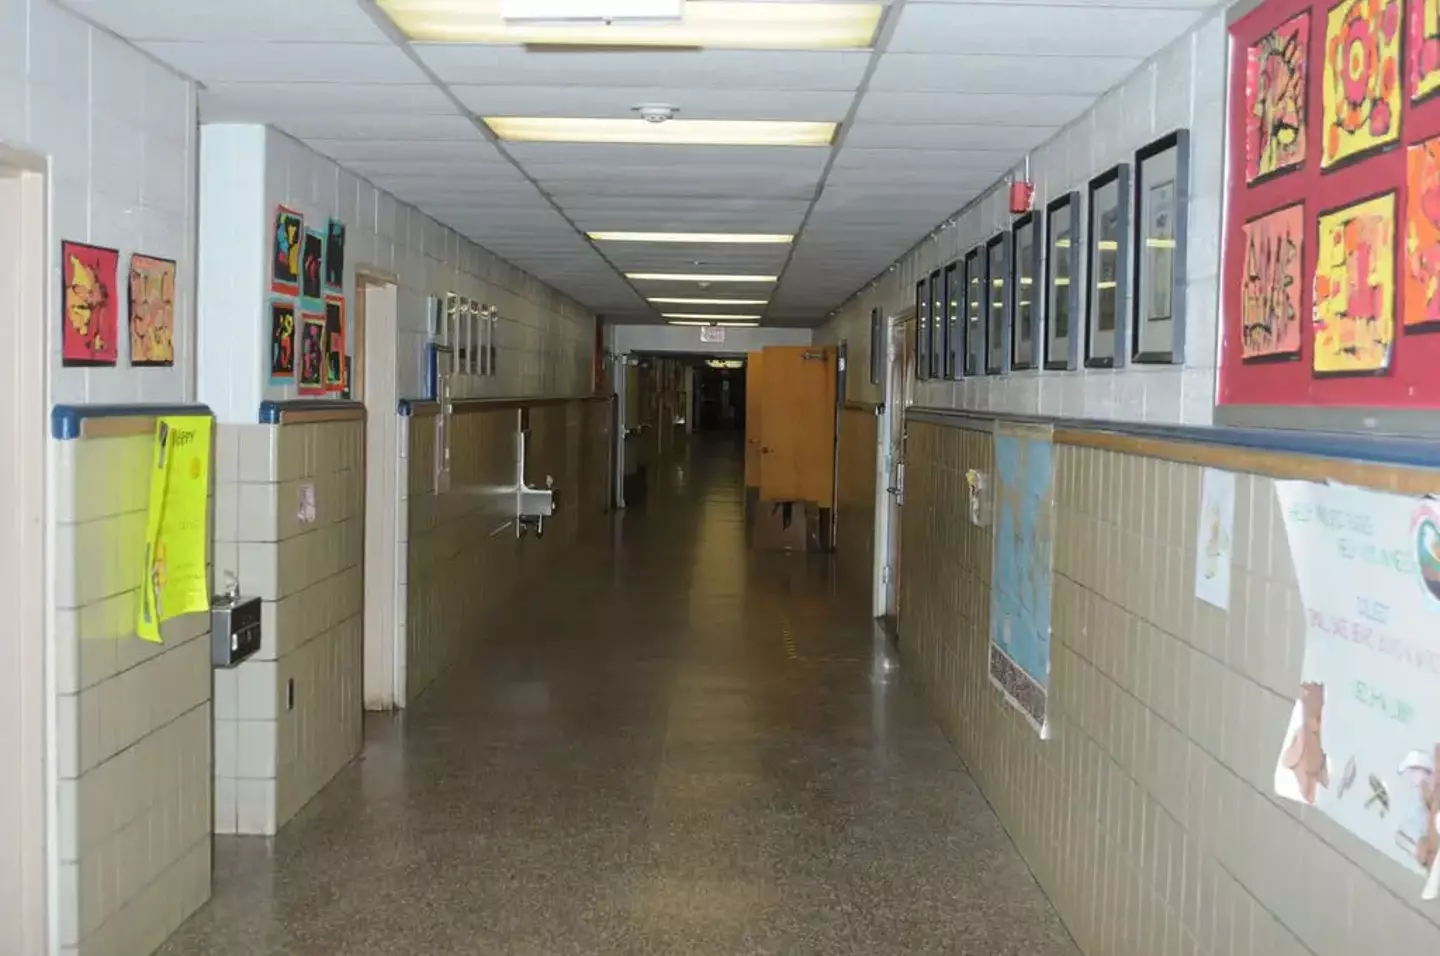 A hallway in the school.